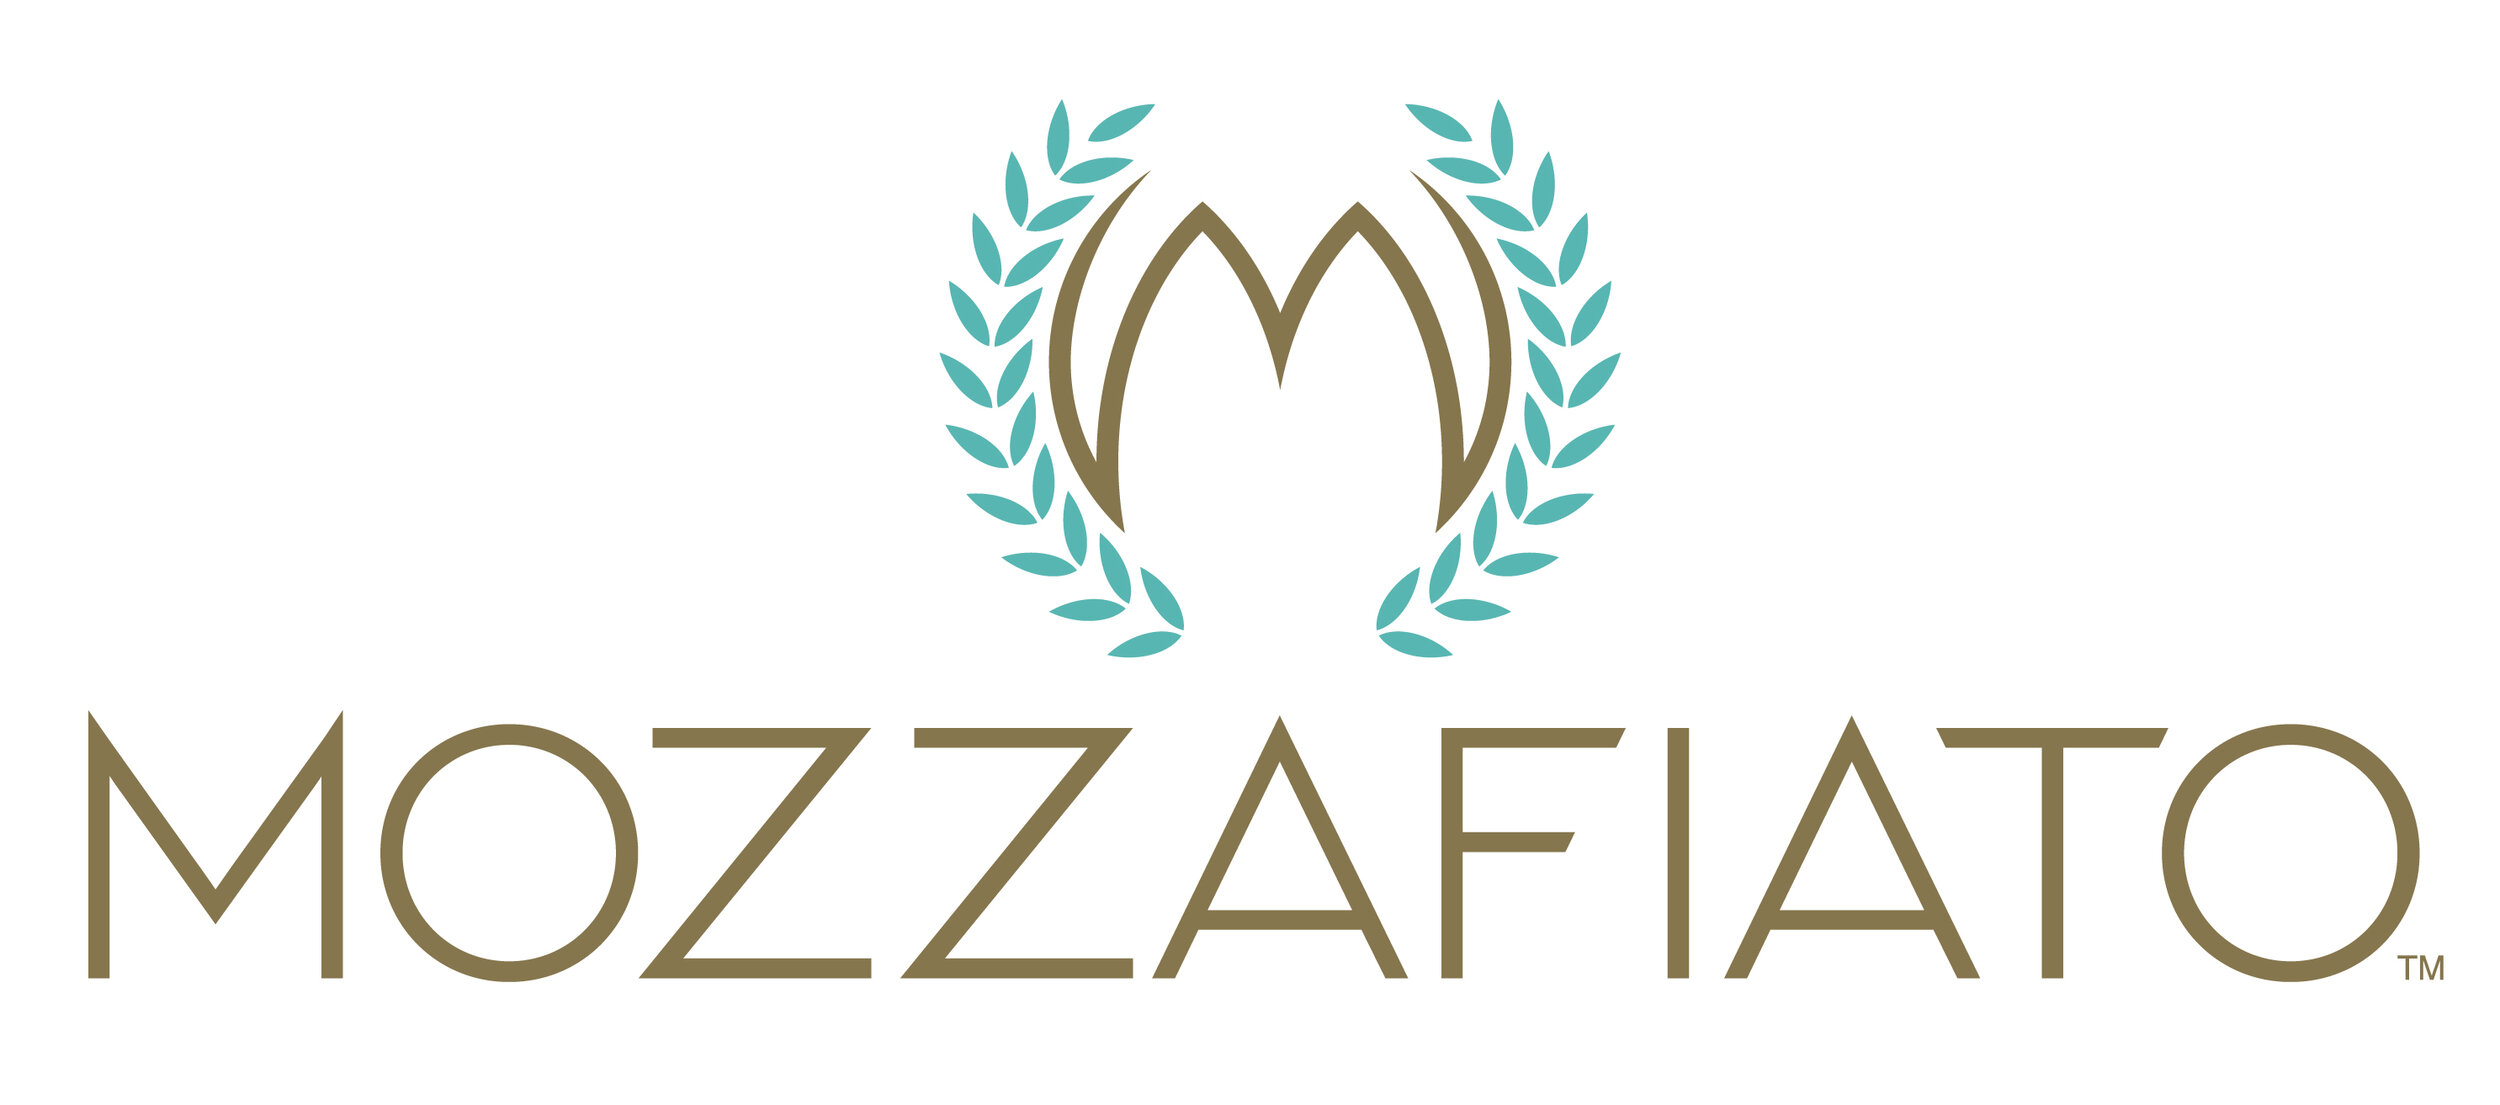 Mozzafiato_Logo_Primary-01.jpg